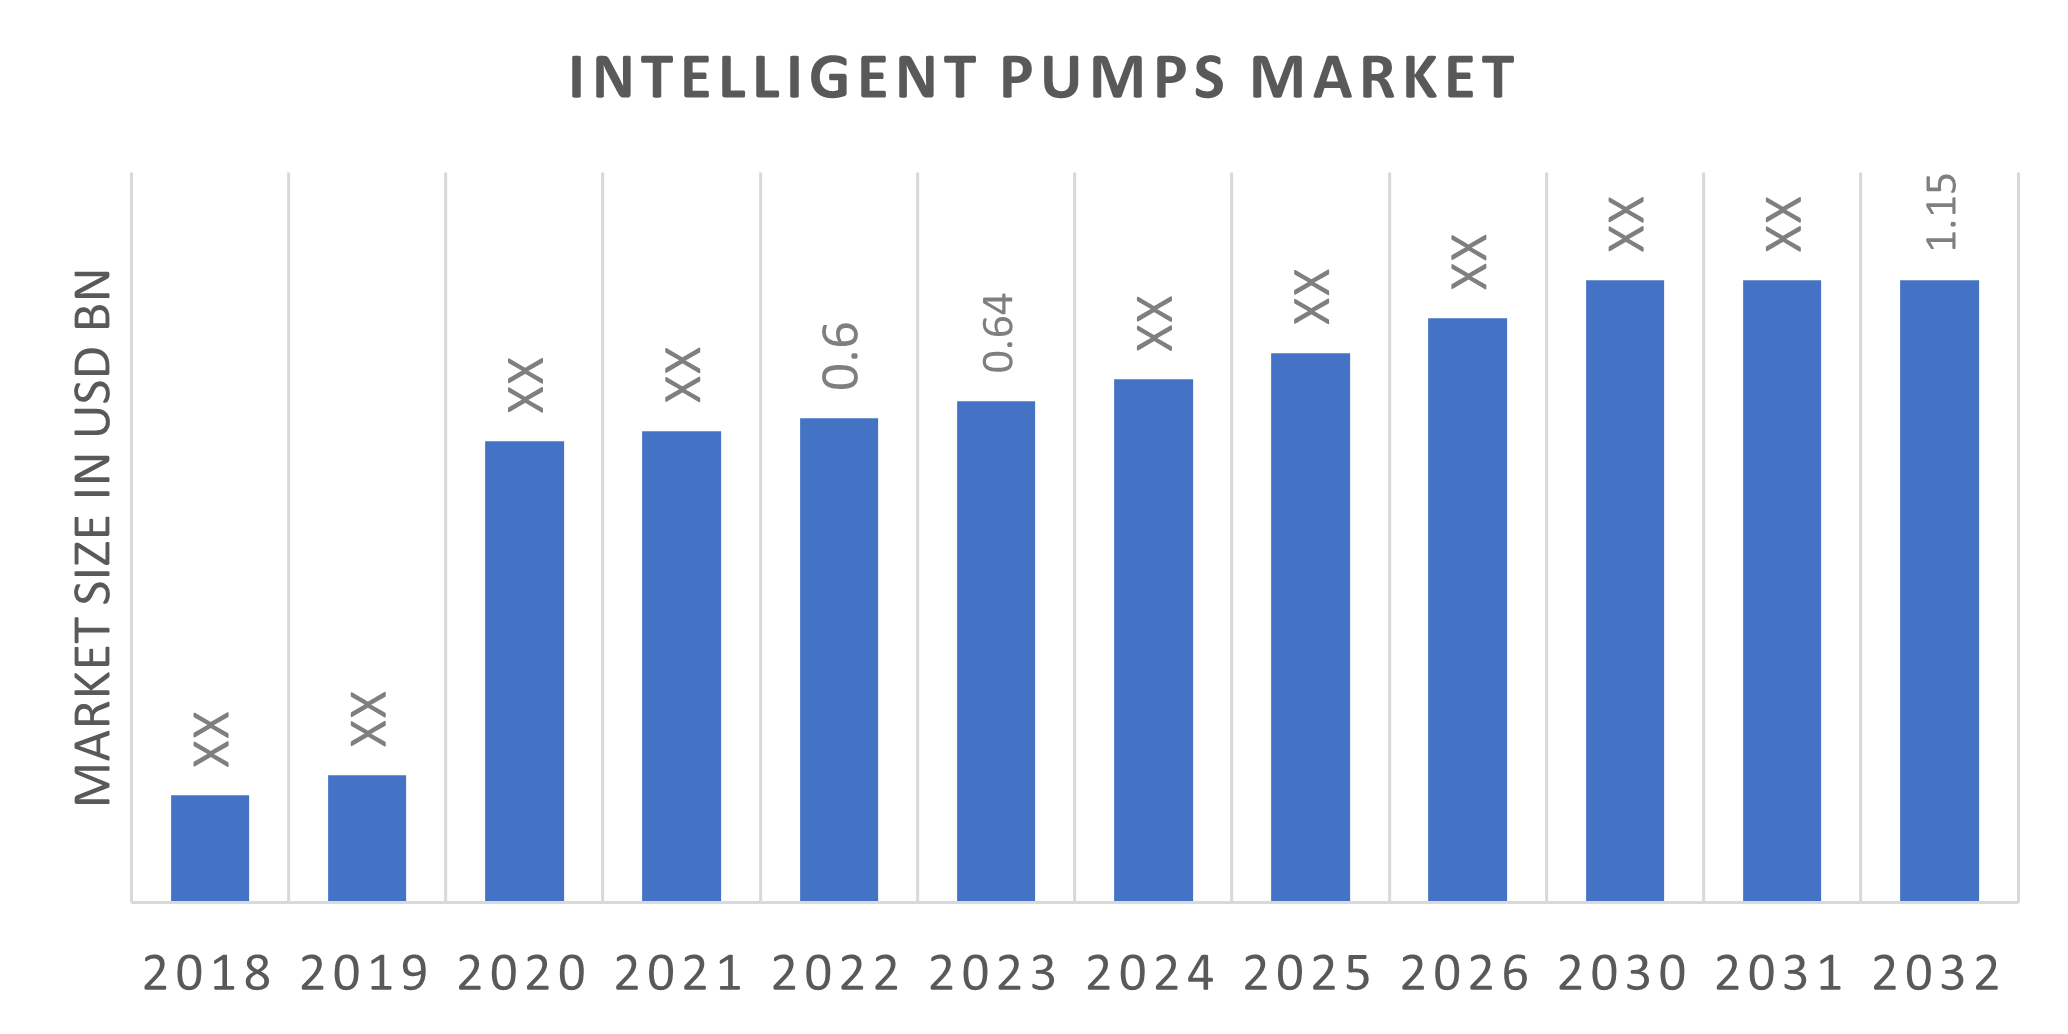 Global Intelligent Pumps Market Overview